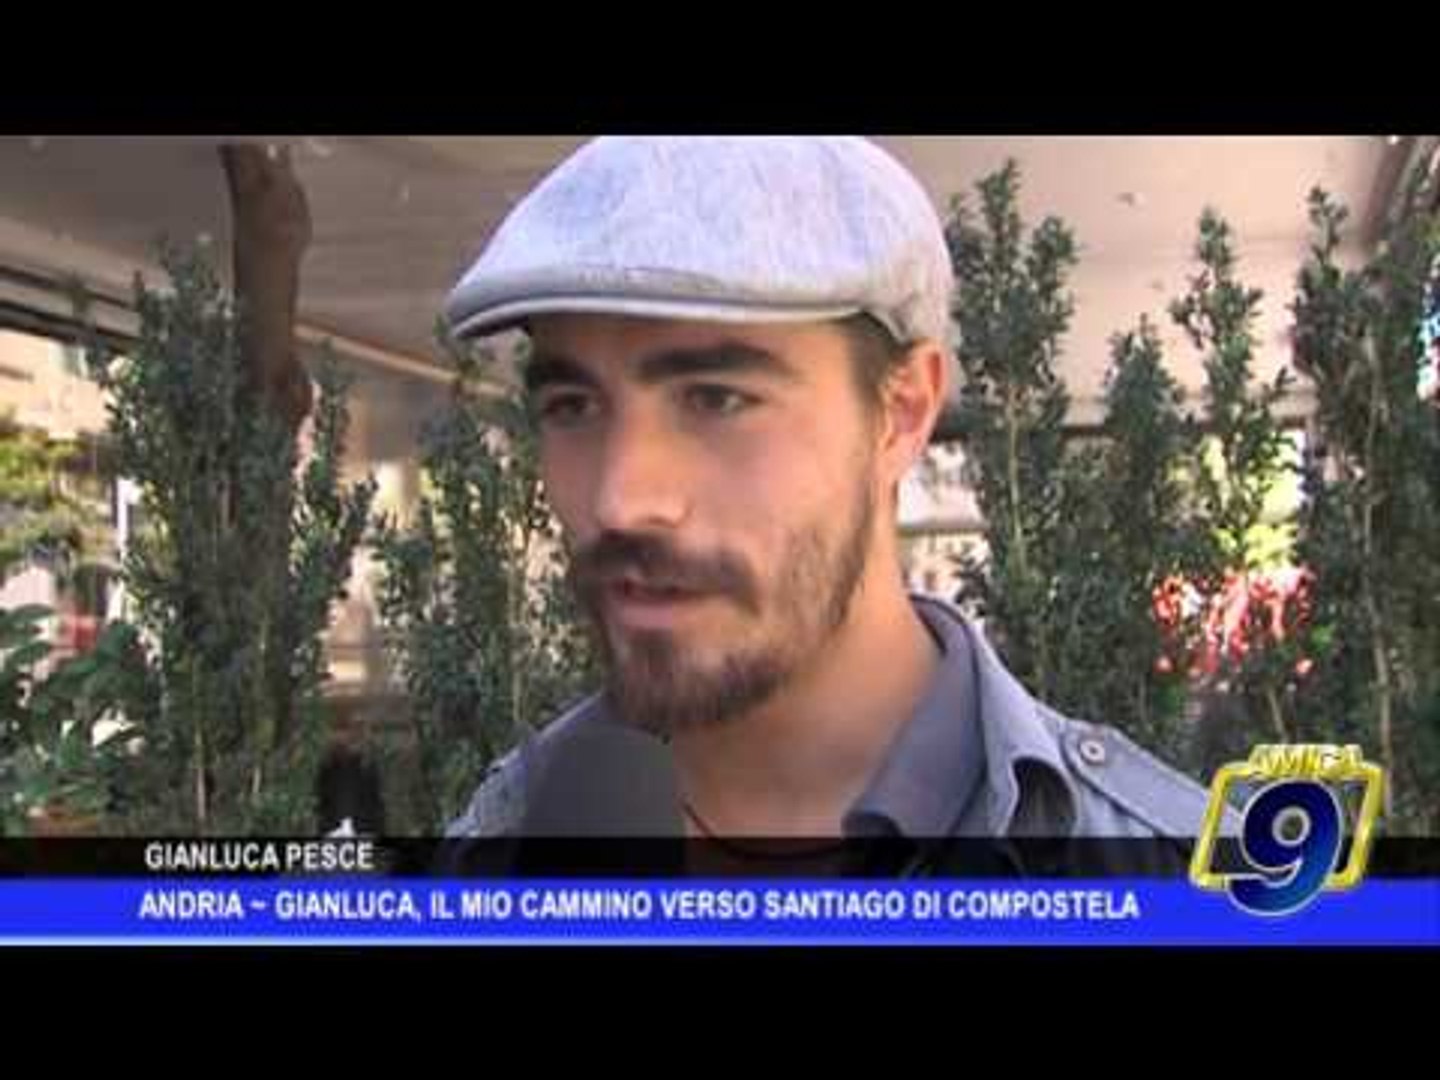 Andria | Gianluca, il mio cammino verso Santiago di Compostela - Video  Dailymotion